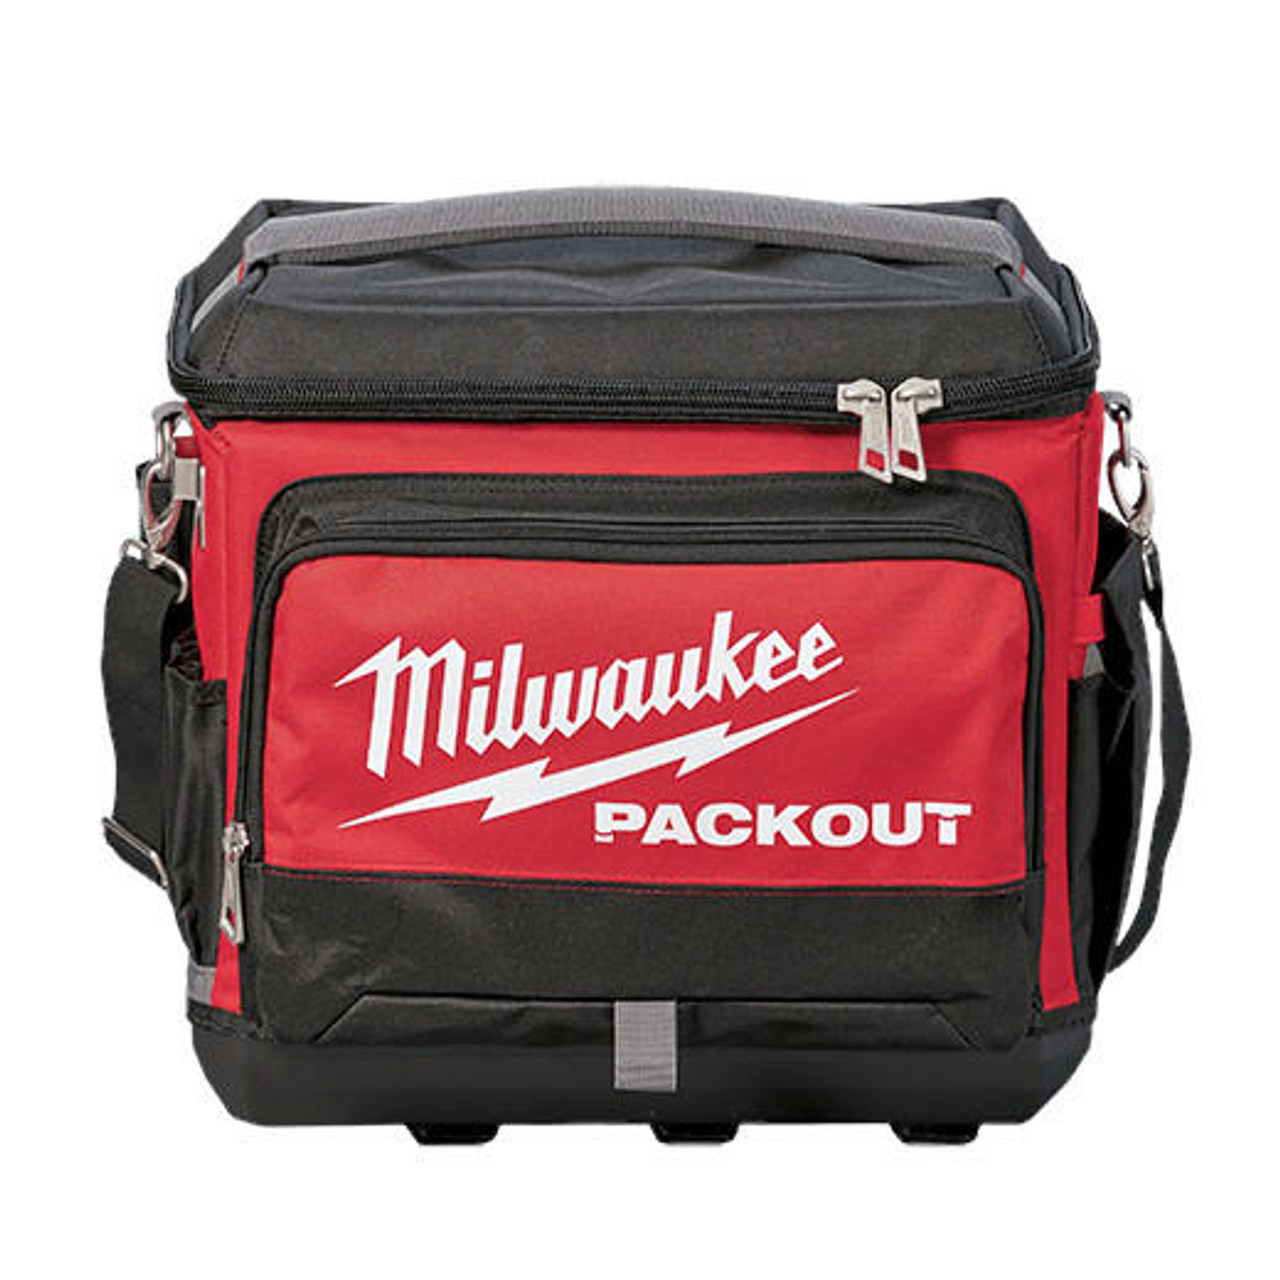  Milwaukee PACKOUT Cooler 48-22-8302 